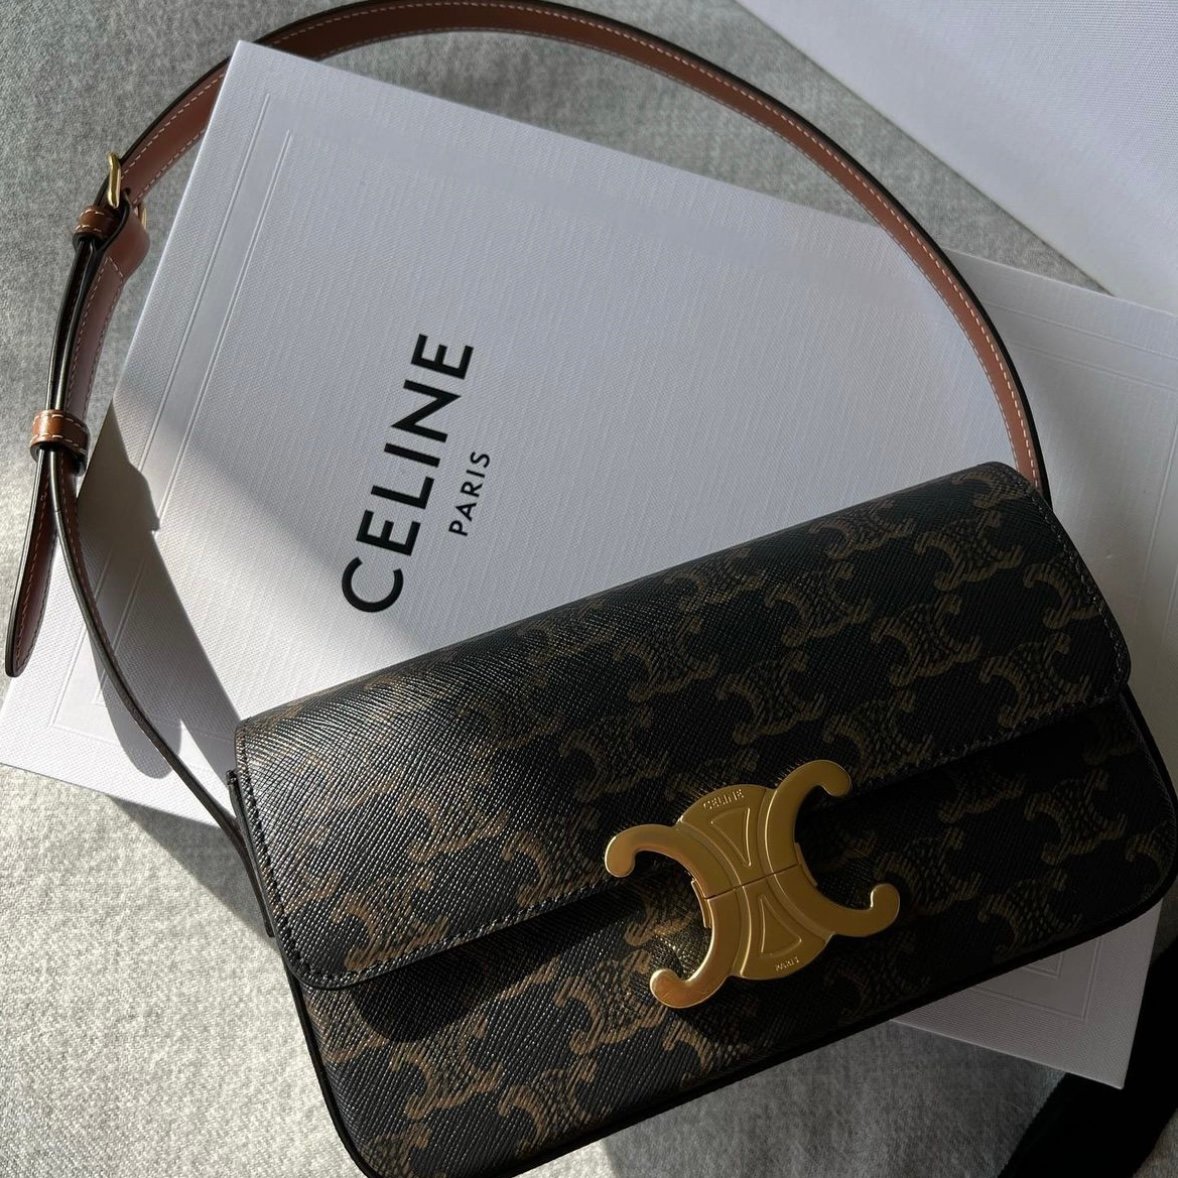 Celine's New Ava Triomphe Bag Is Already a Celeb Favourite